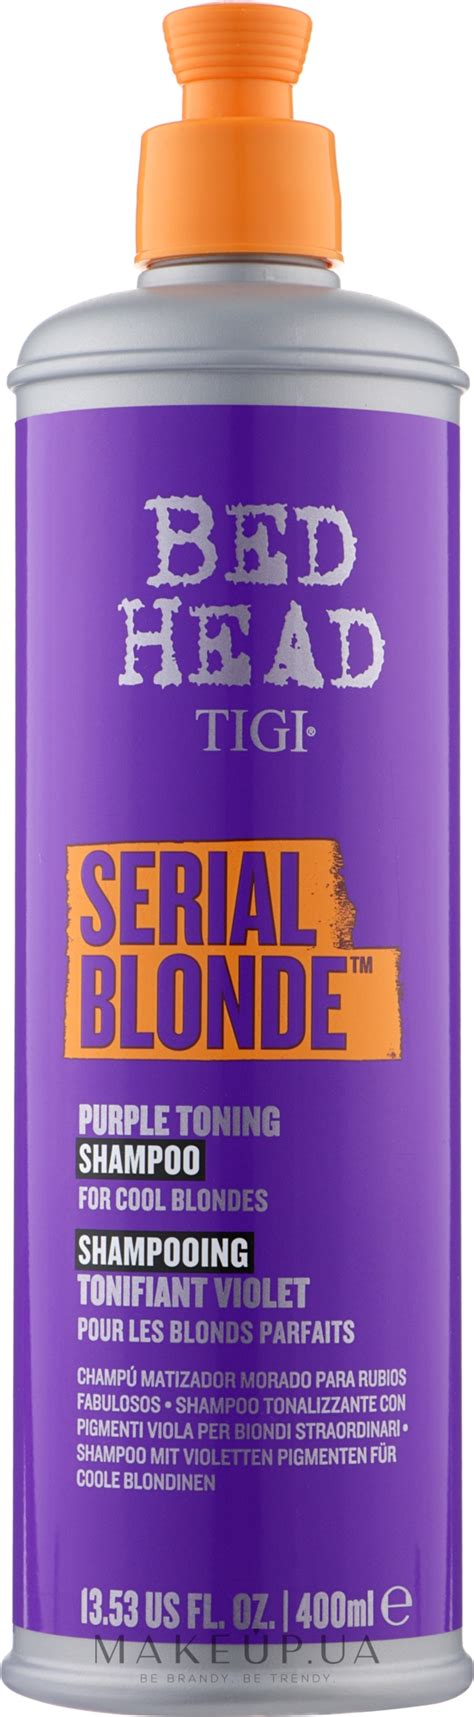 Tigi Bed Head Serial Blonde Purple